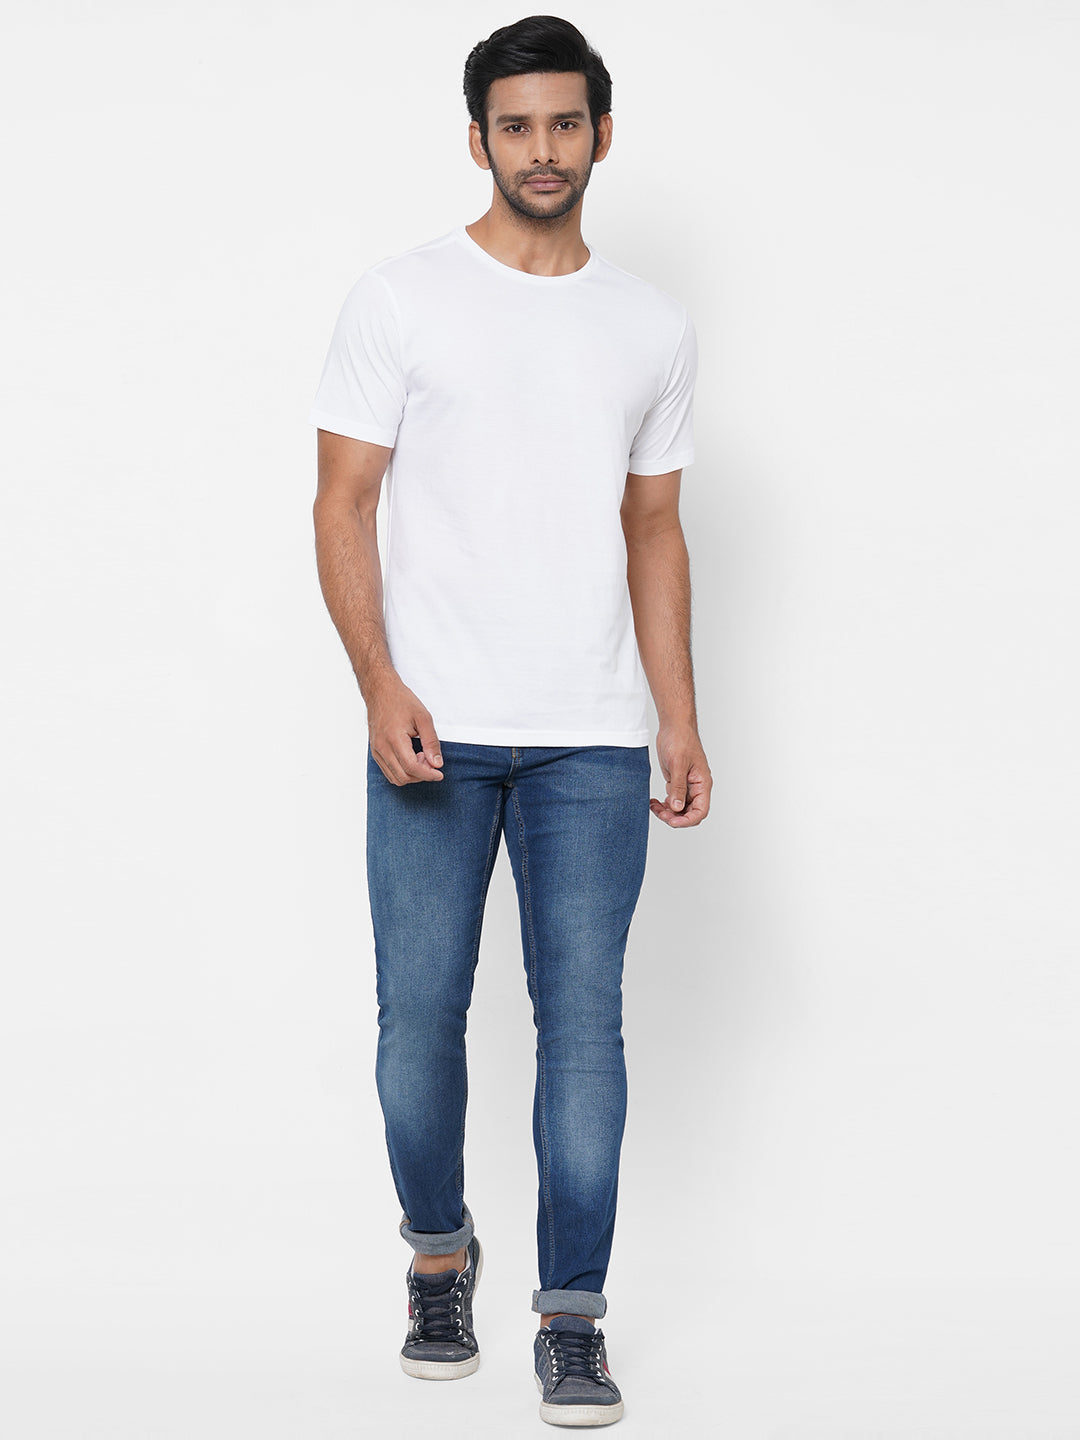 Men's White Cotton Regular Fit Tshirts